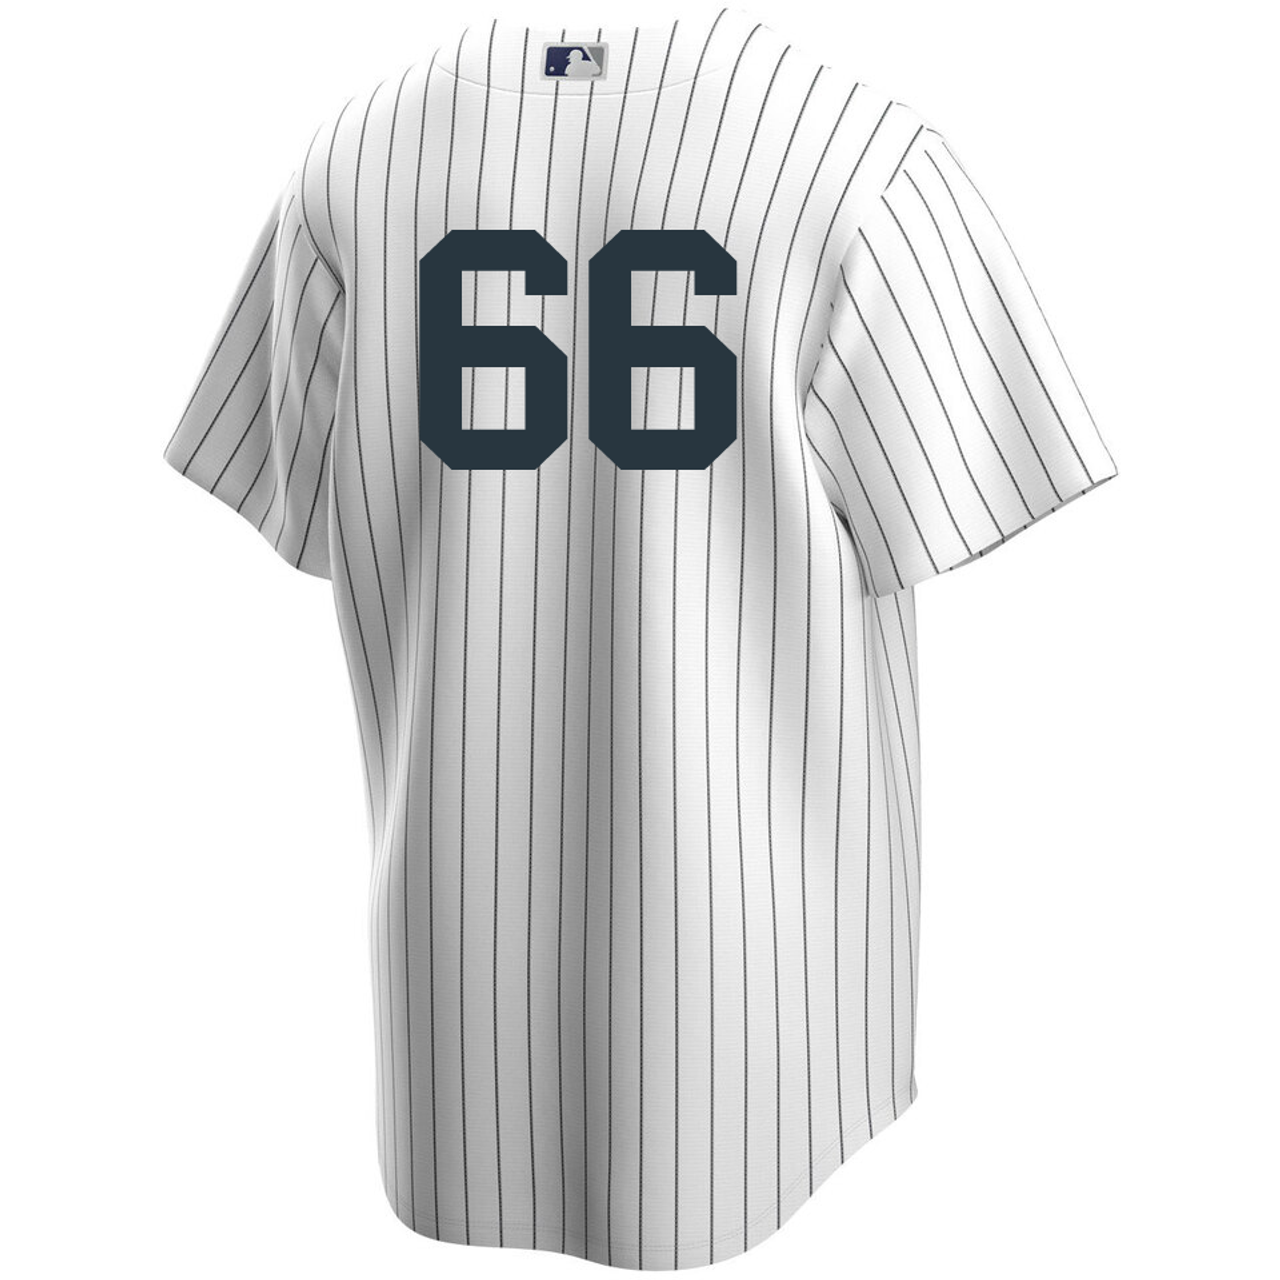 Kyle Higashioka No Name Jersey - NY Yankees Number Only